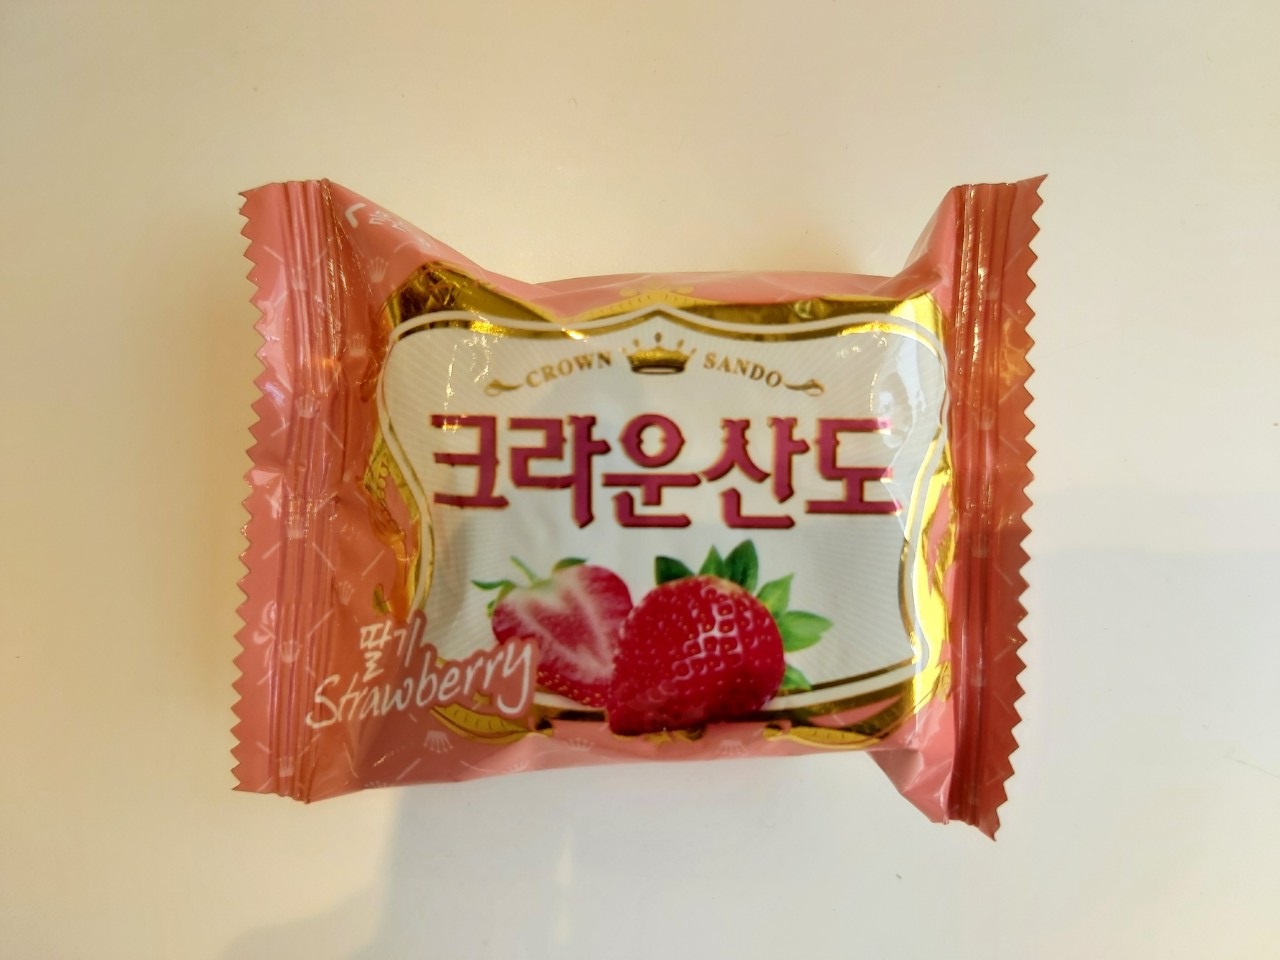 Sando Cream Strawberry 1PC